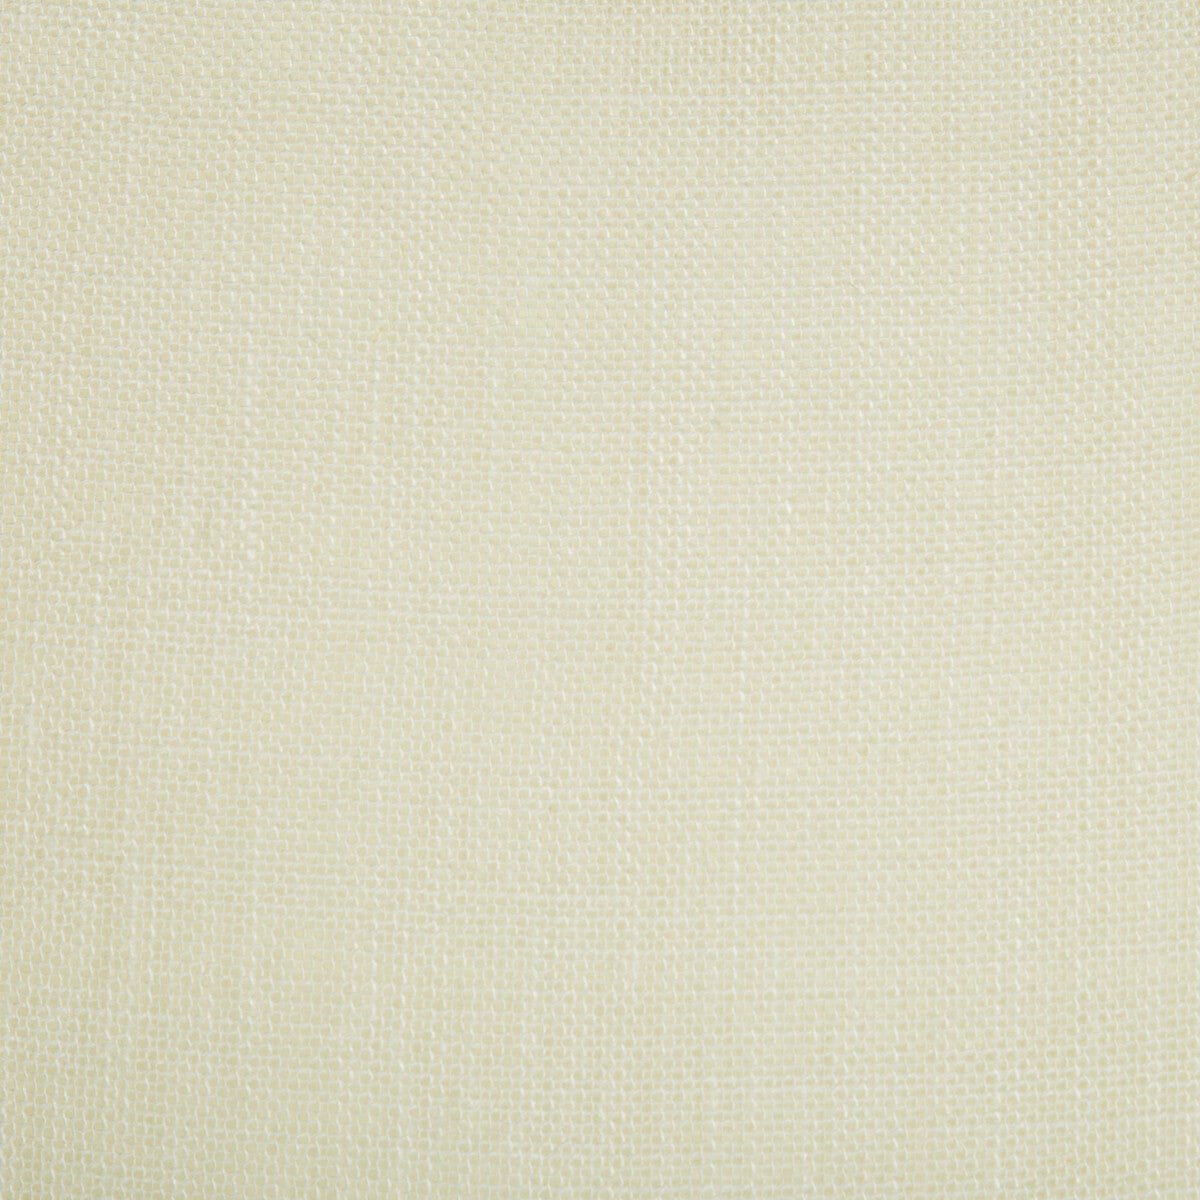 Kravet Basics fabric in 4254-1 color - pattern 4254.1.0 - by Kravet Basics in the Gis collection